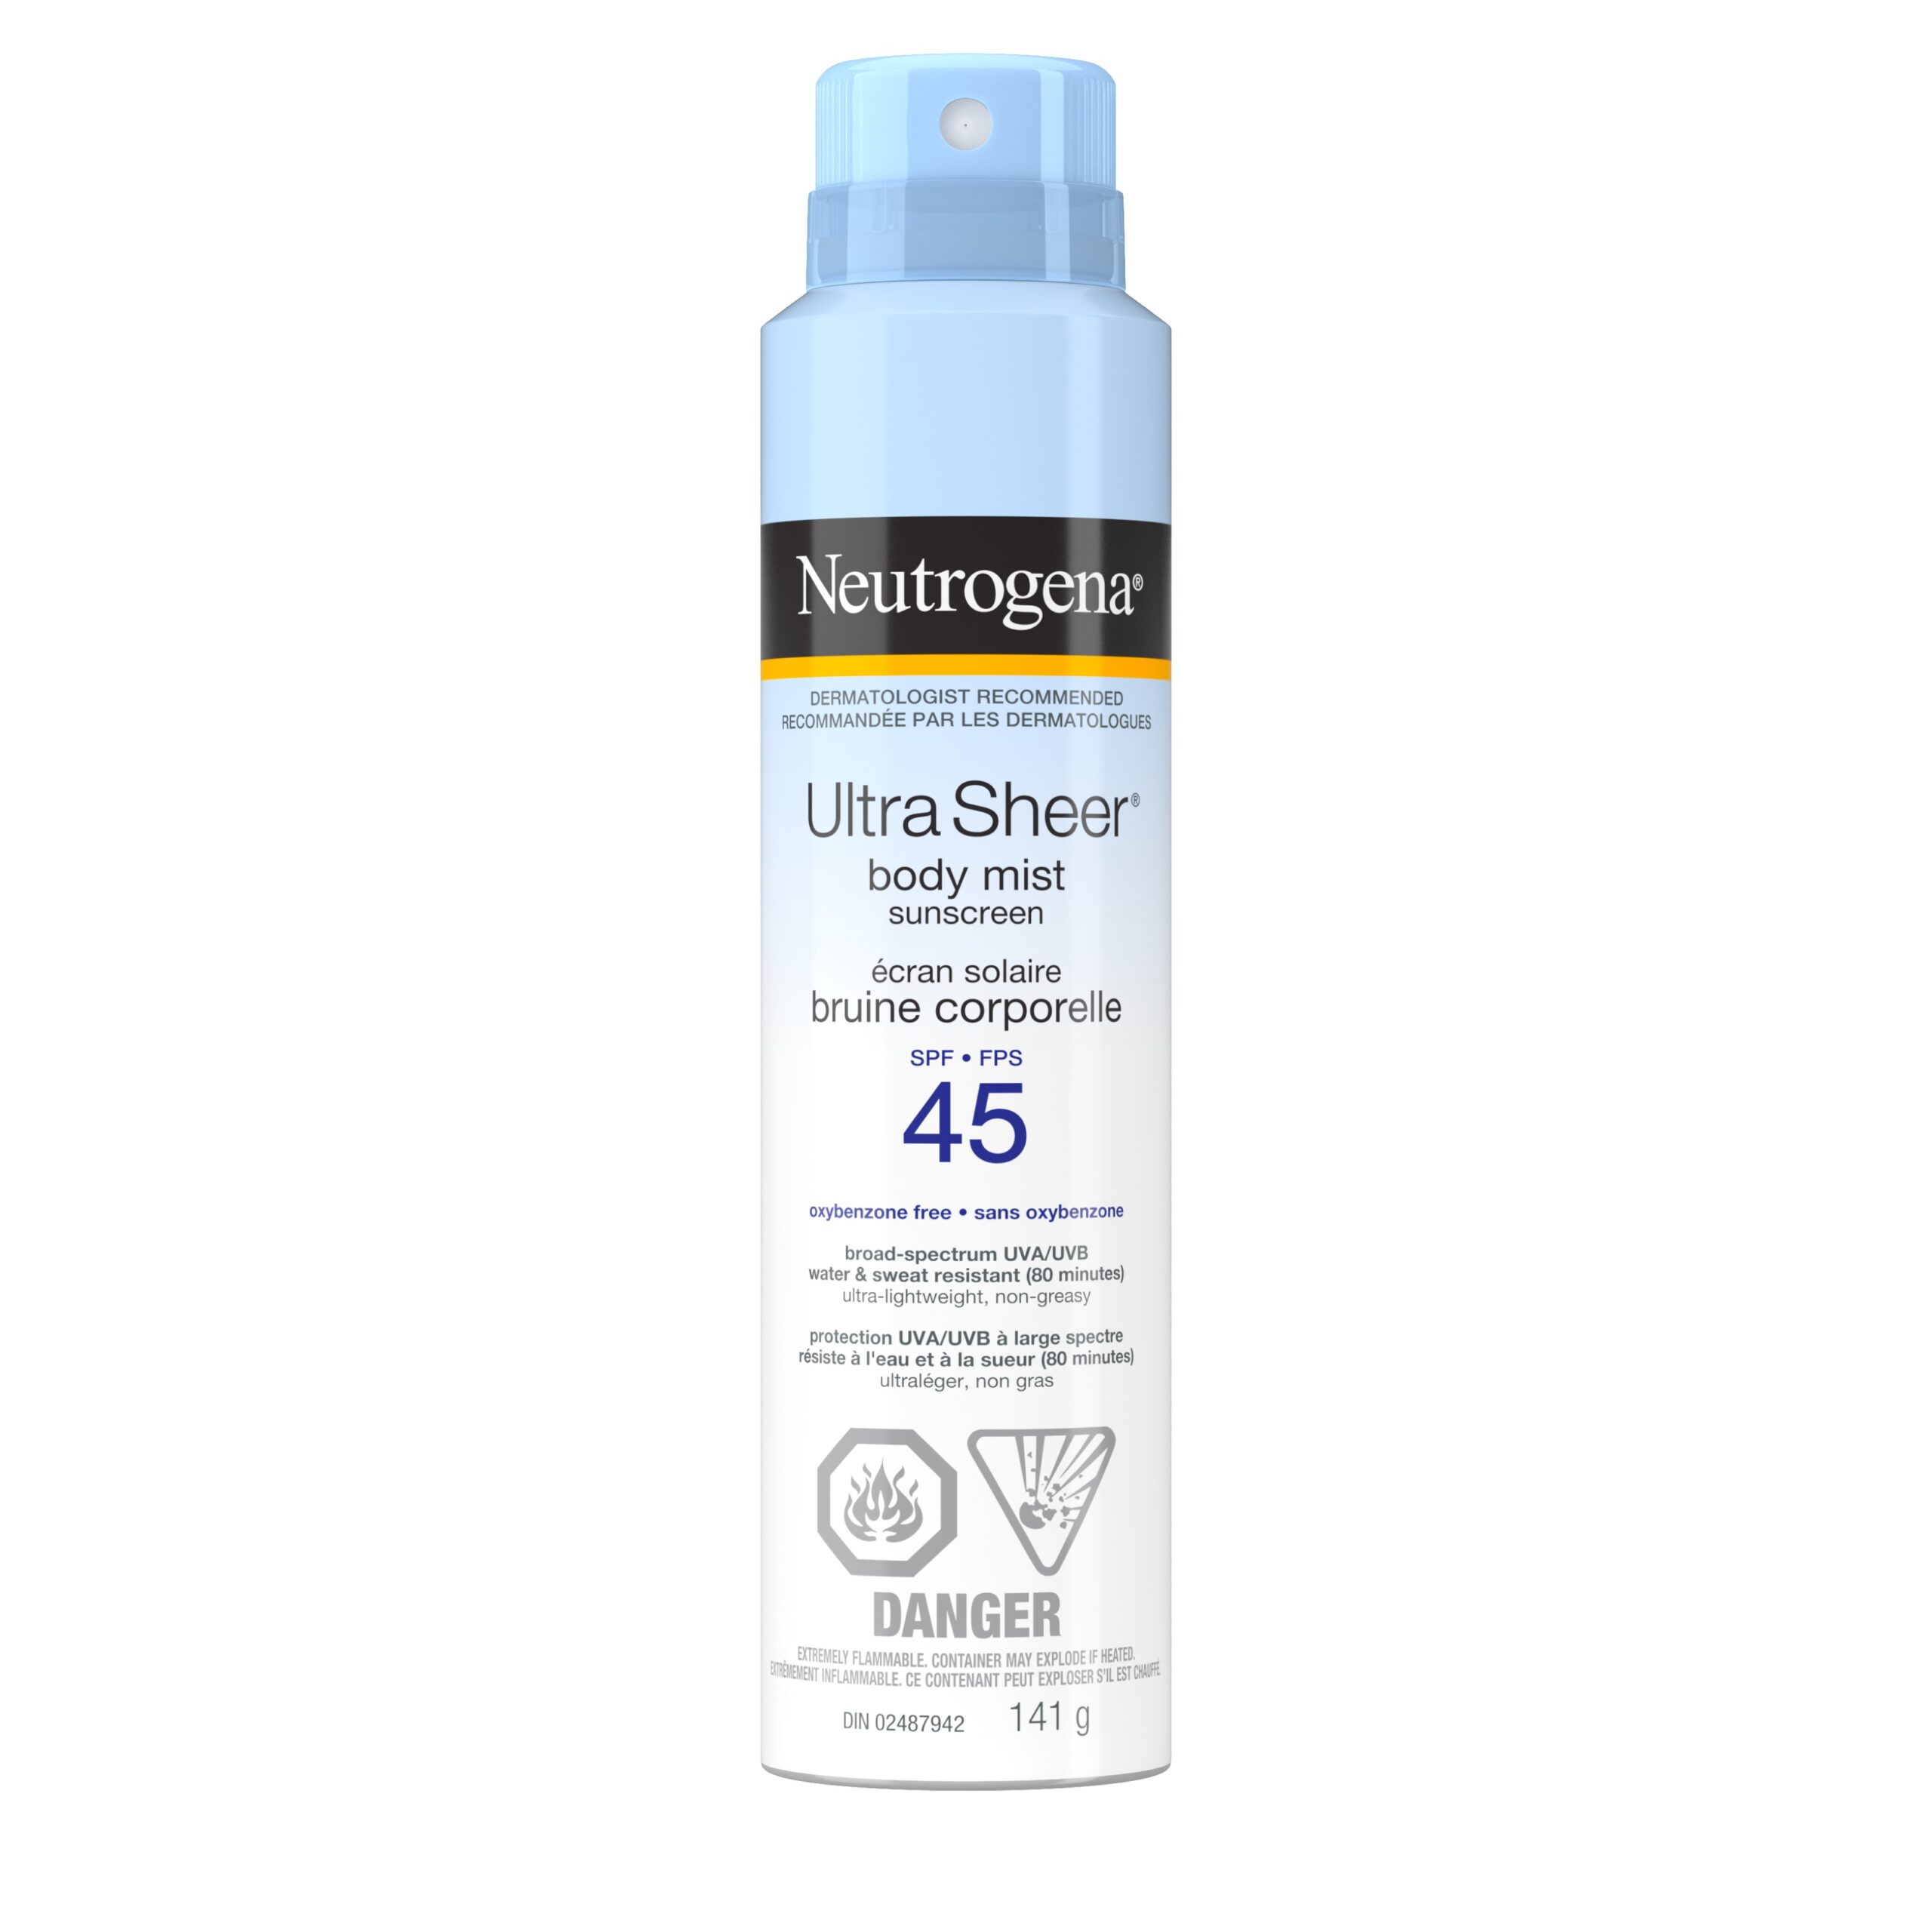 Neutrogena Ultra Sheer Body Mist Sunscreen - $14.98 - $17.99 CAD